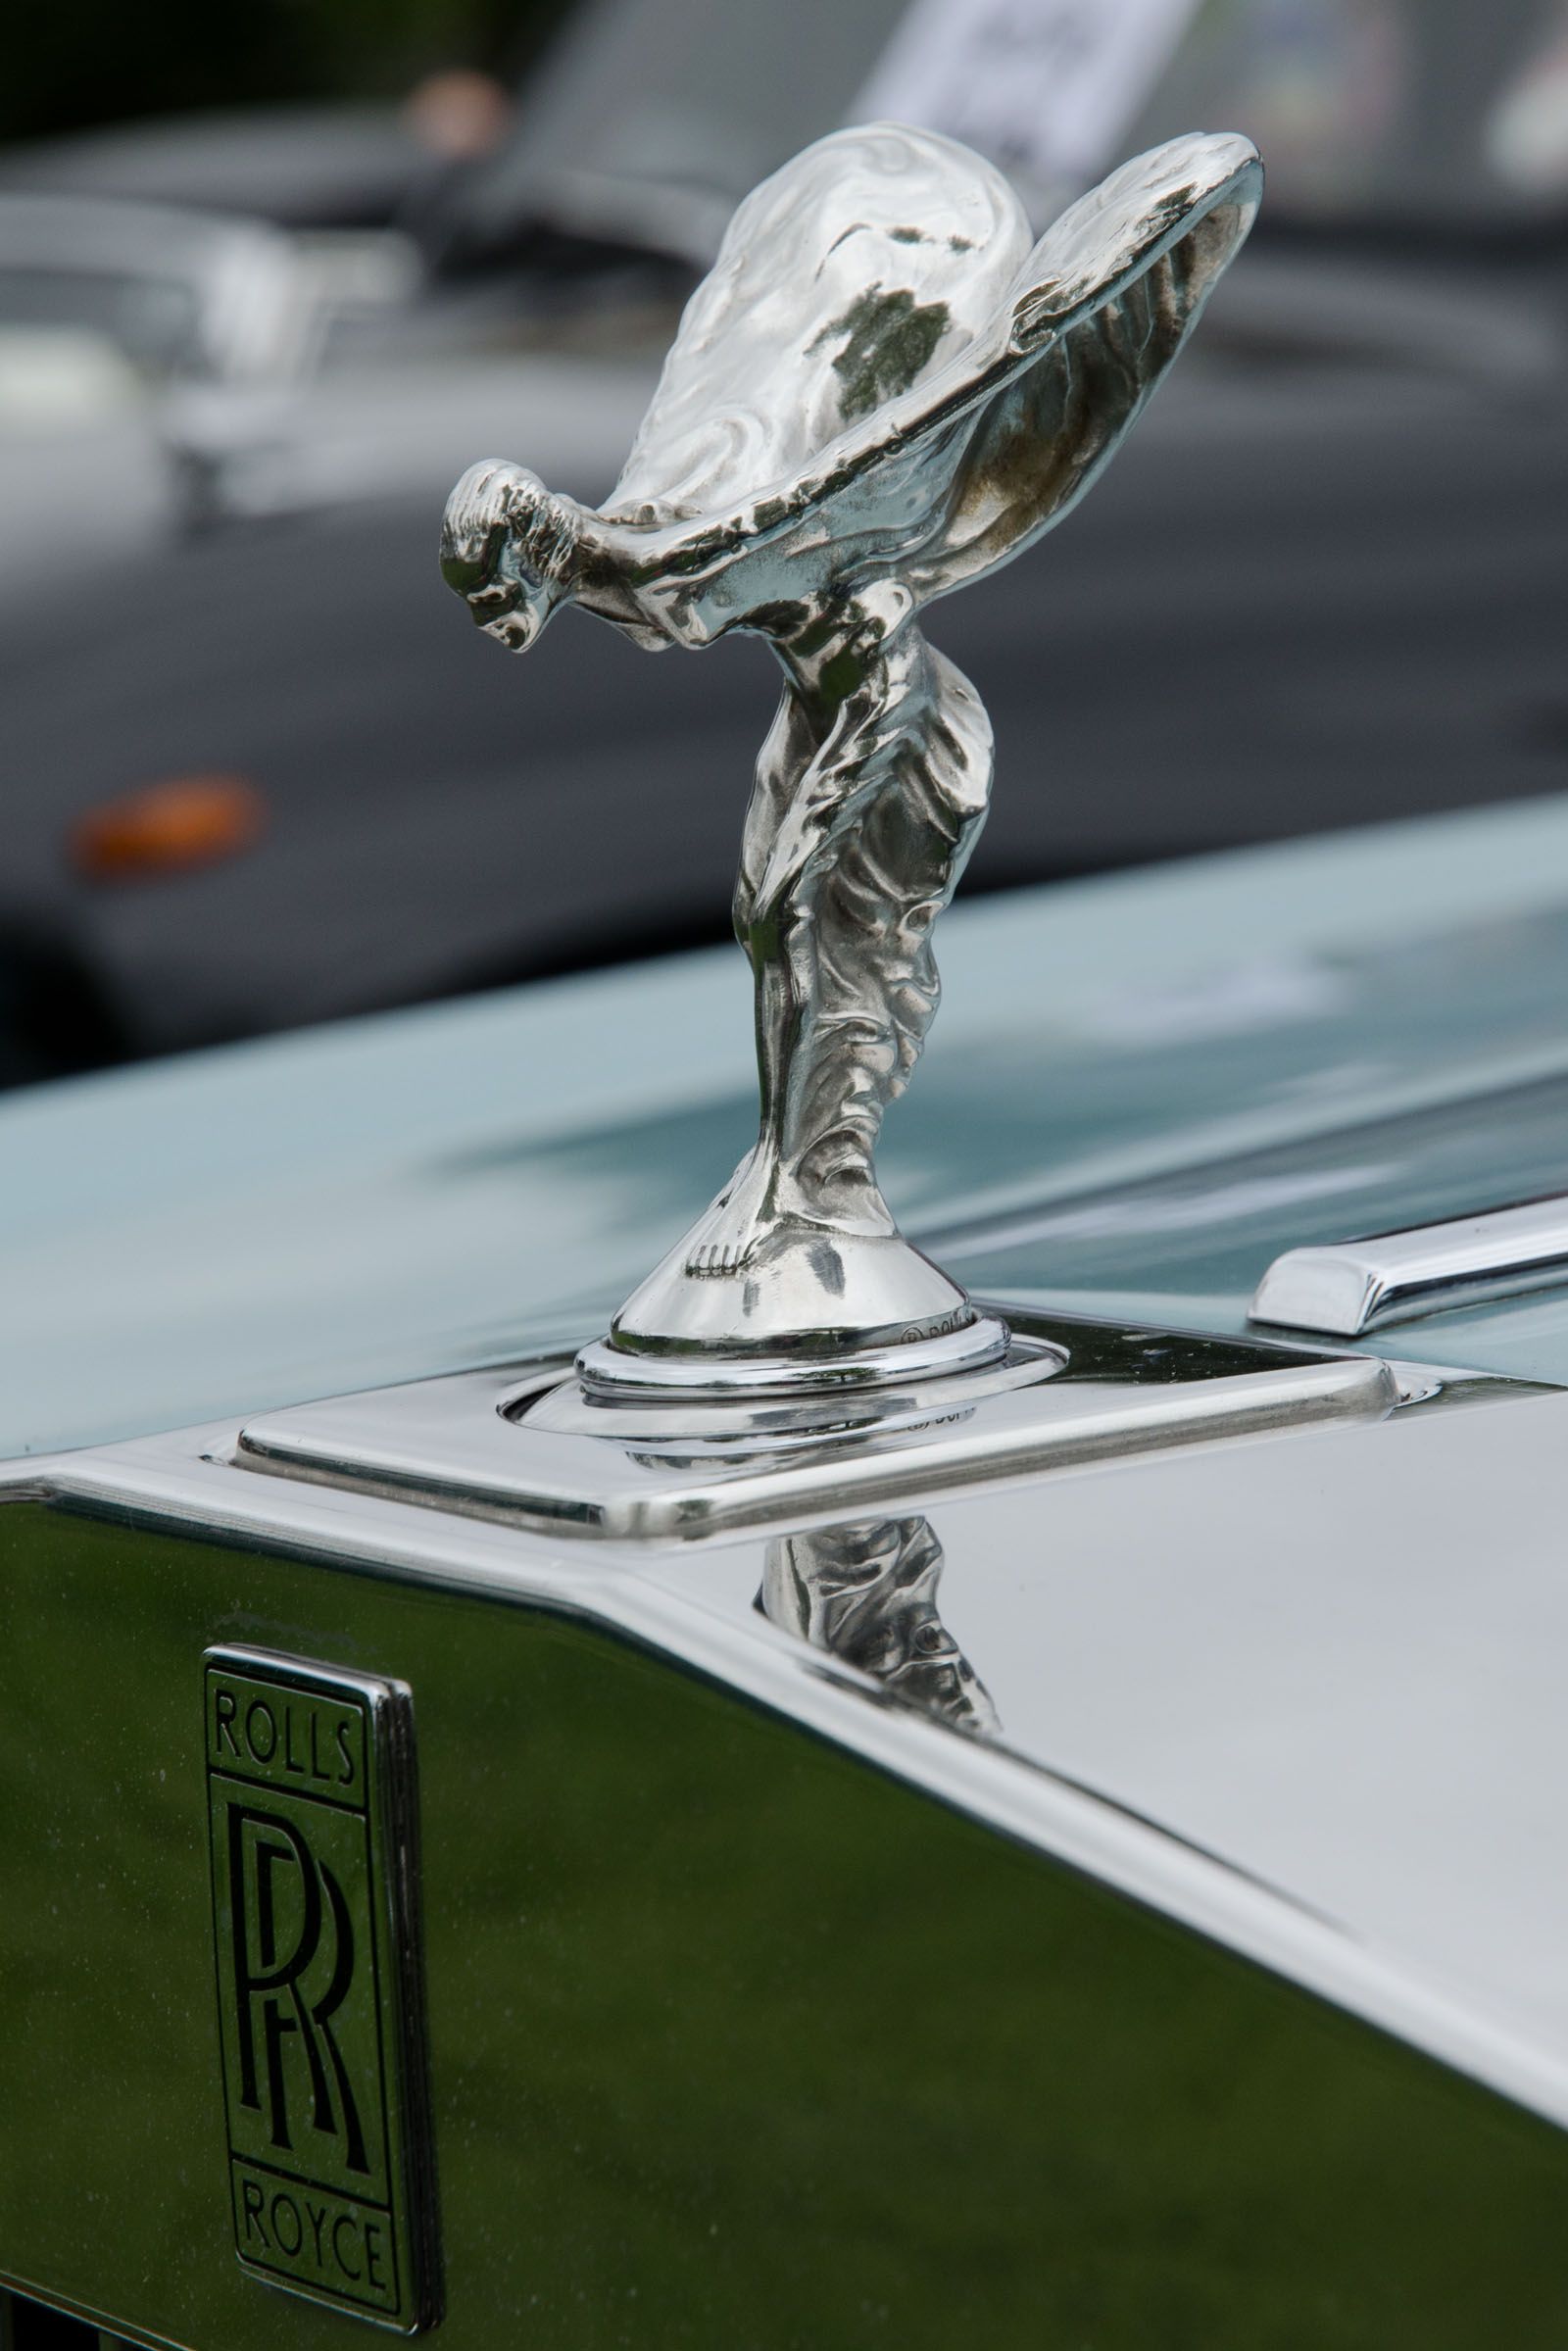 The Rolls-Royce Emblem 